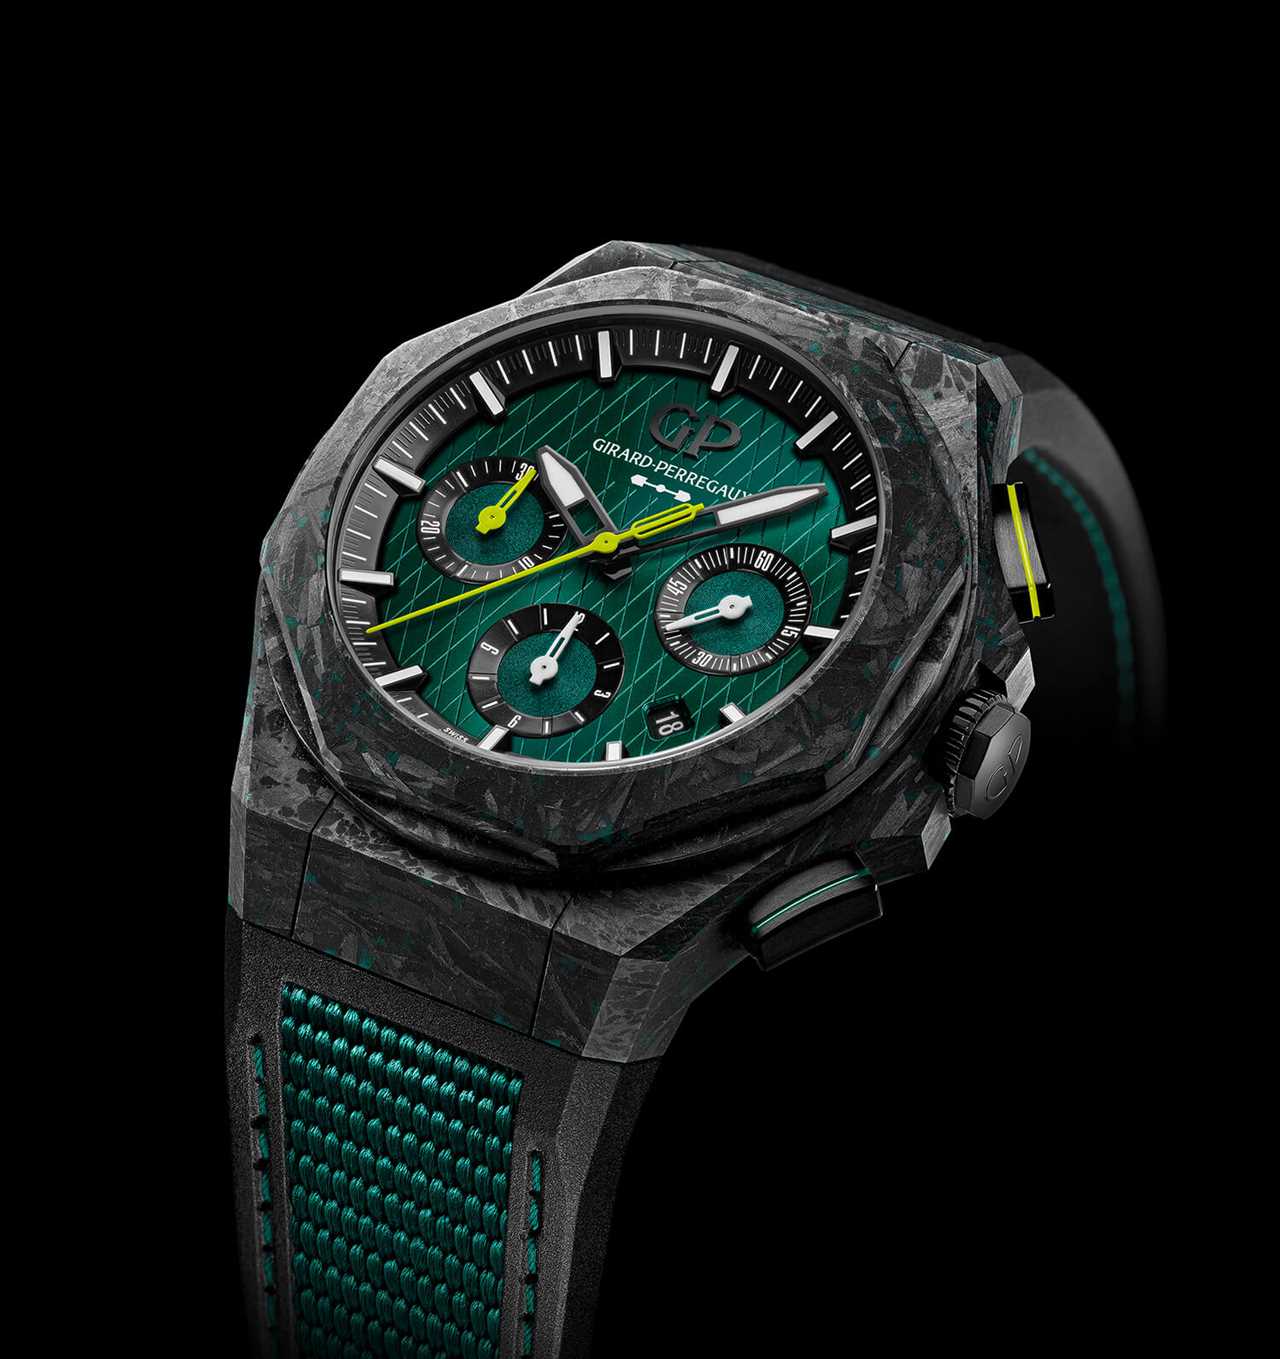 Girard-Perregaux Aston Martin F1 Limited Edition timepiece 2